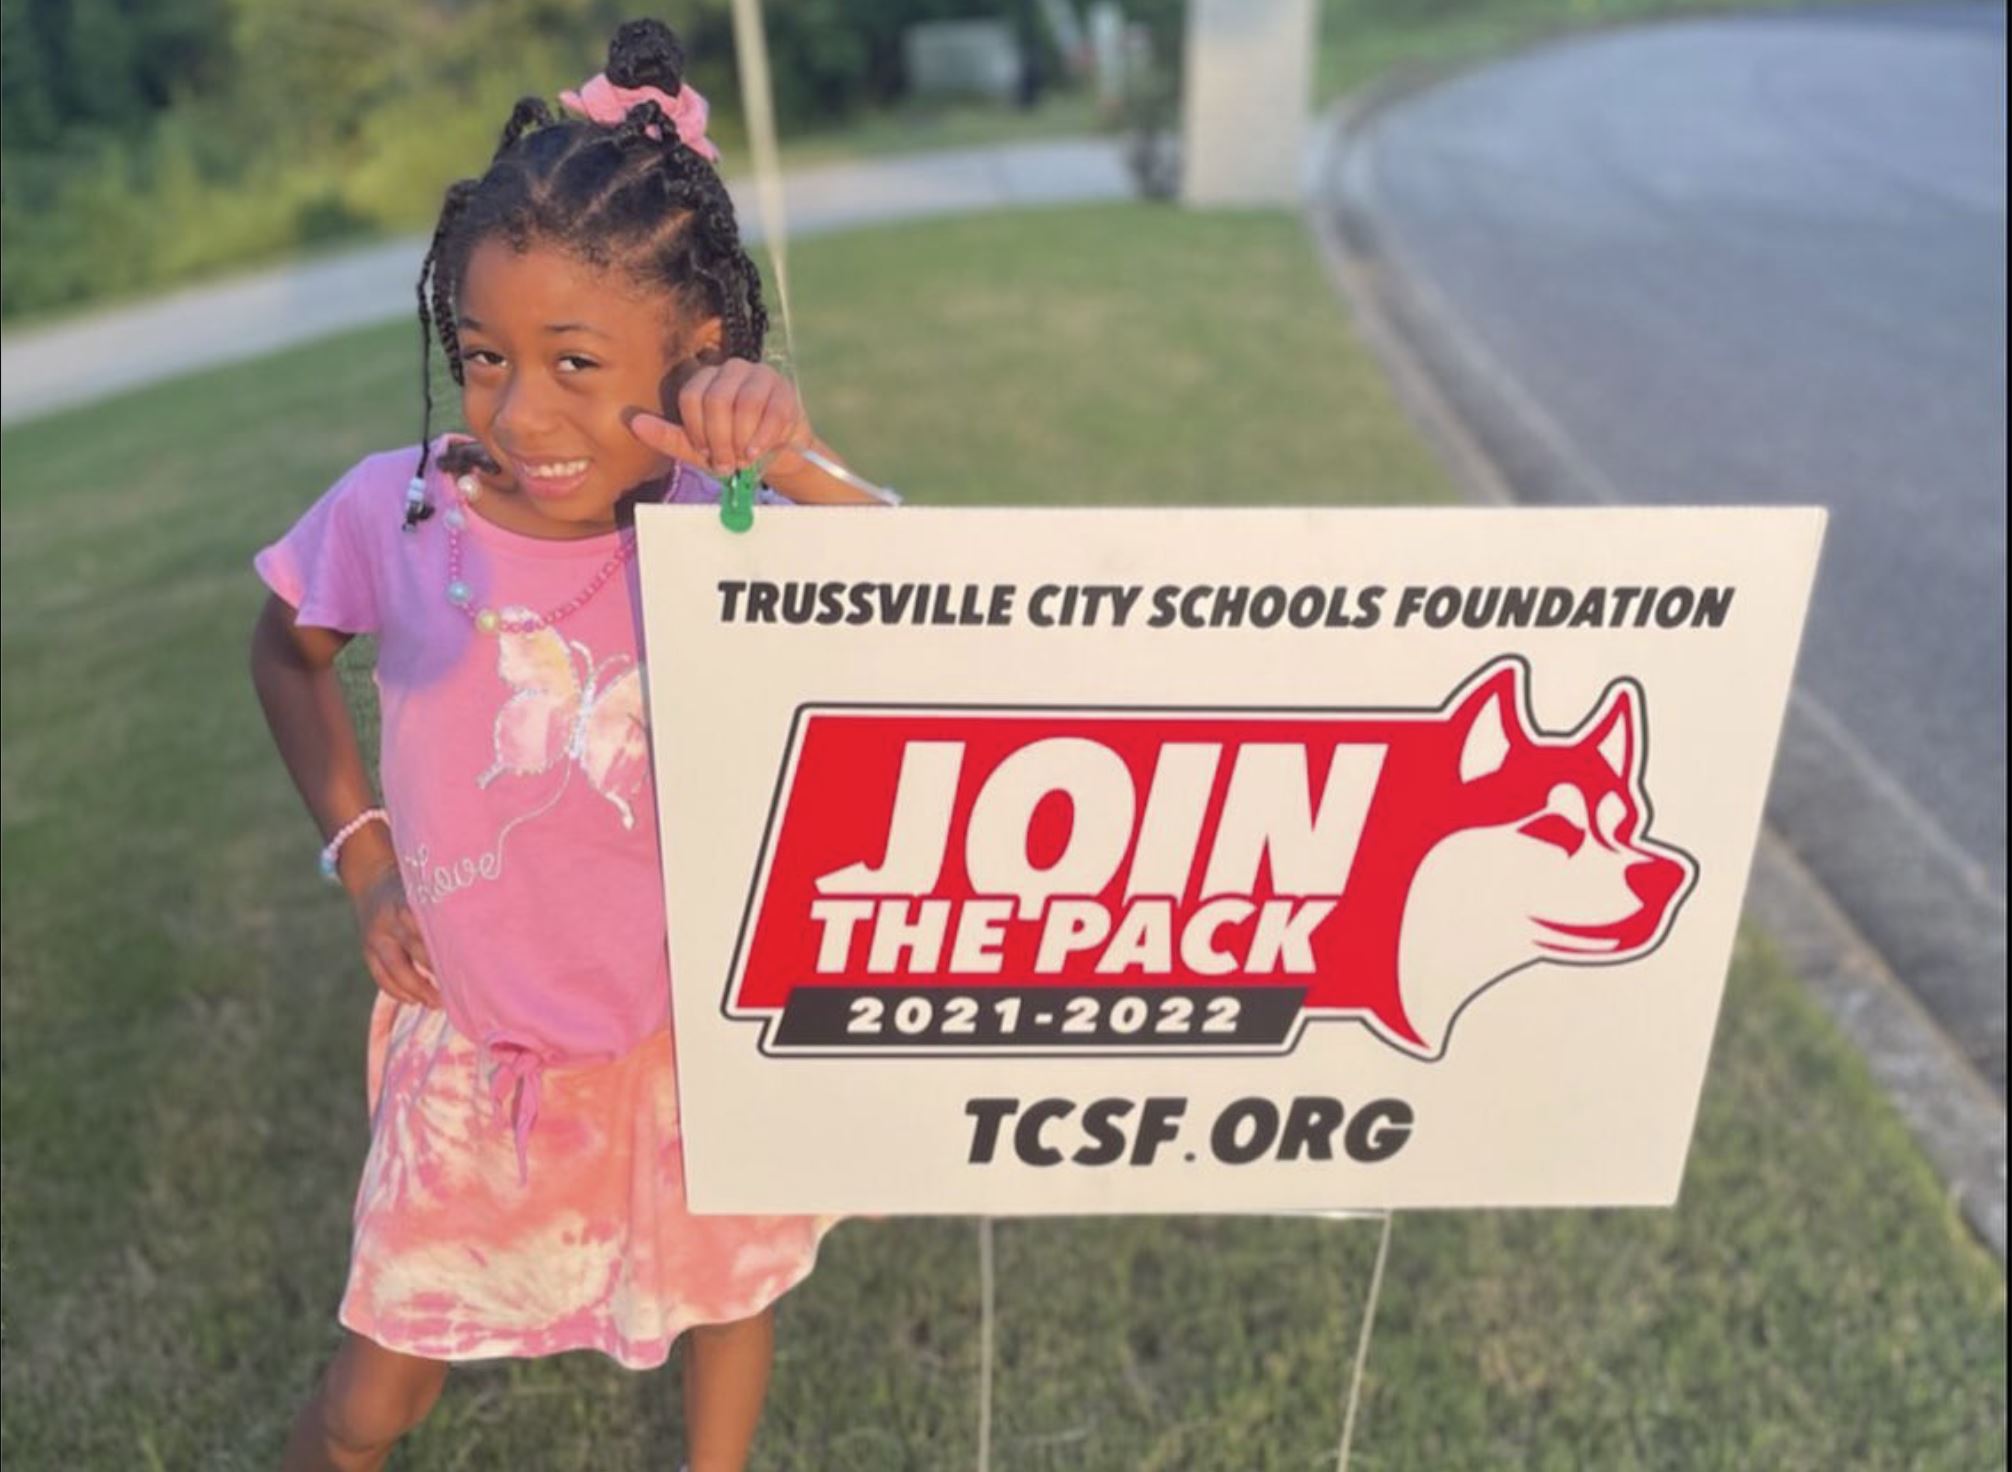 Trussville City Schools Foundation announces new fundraising effort